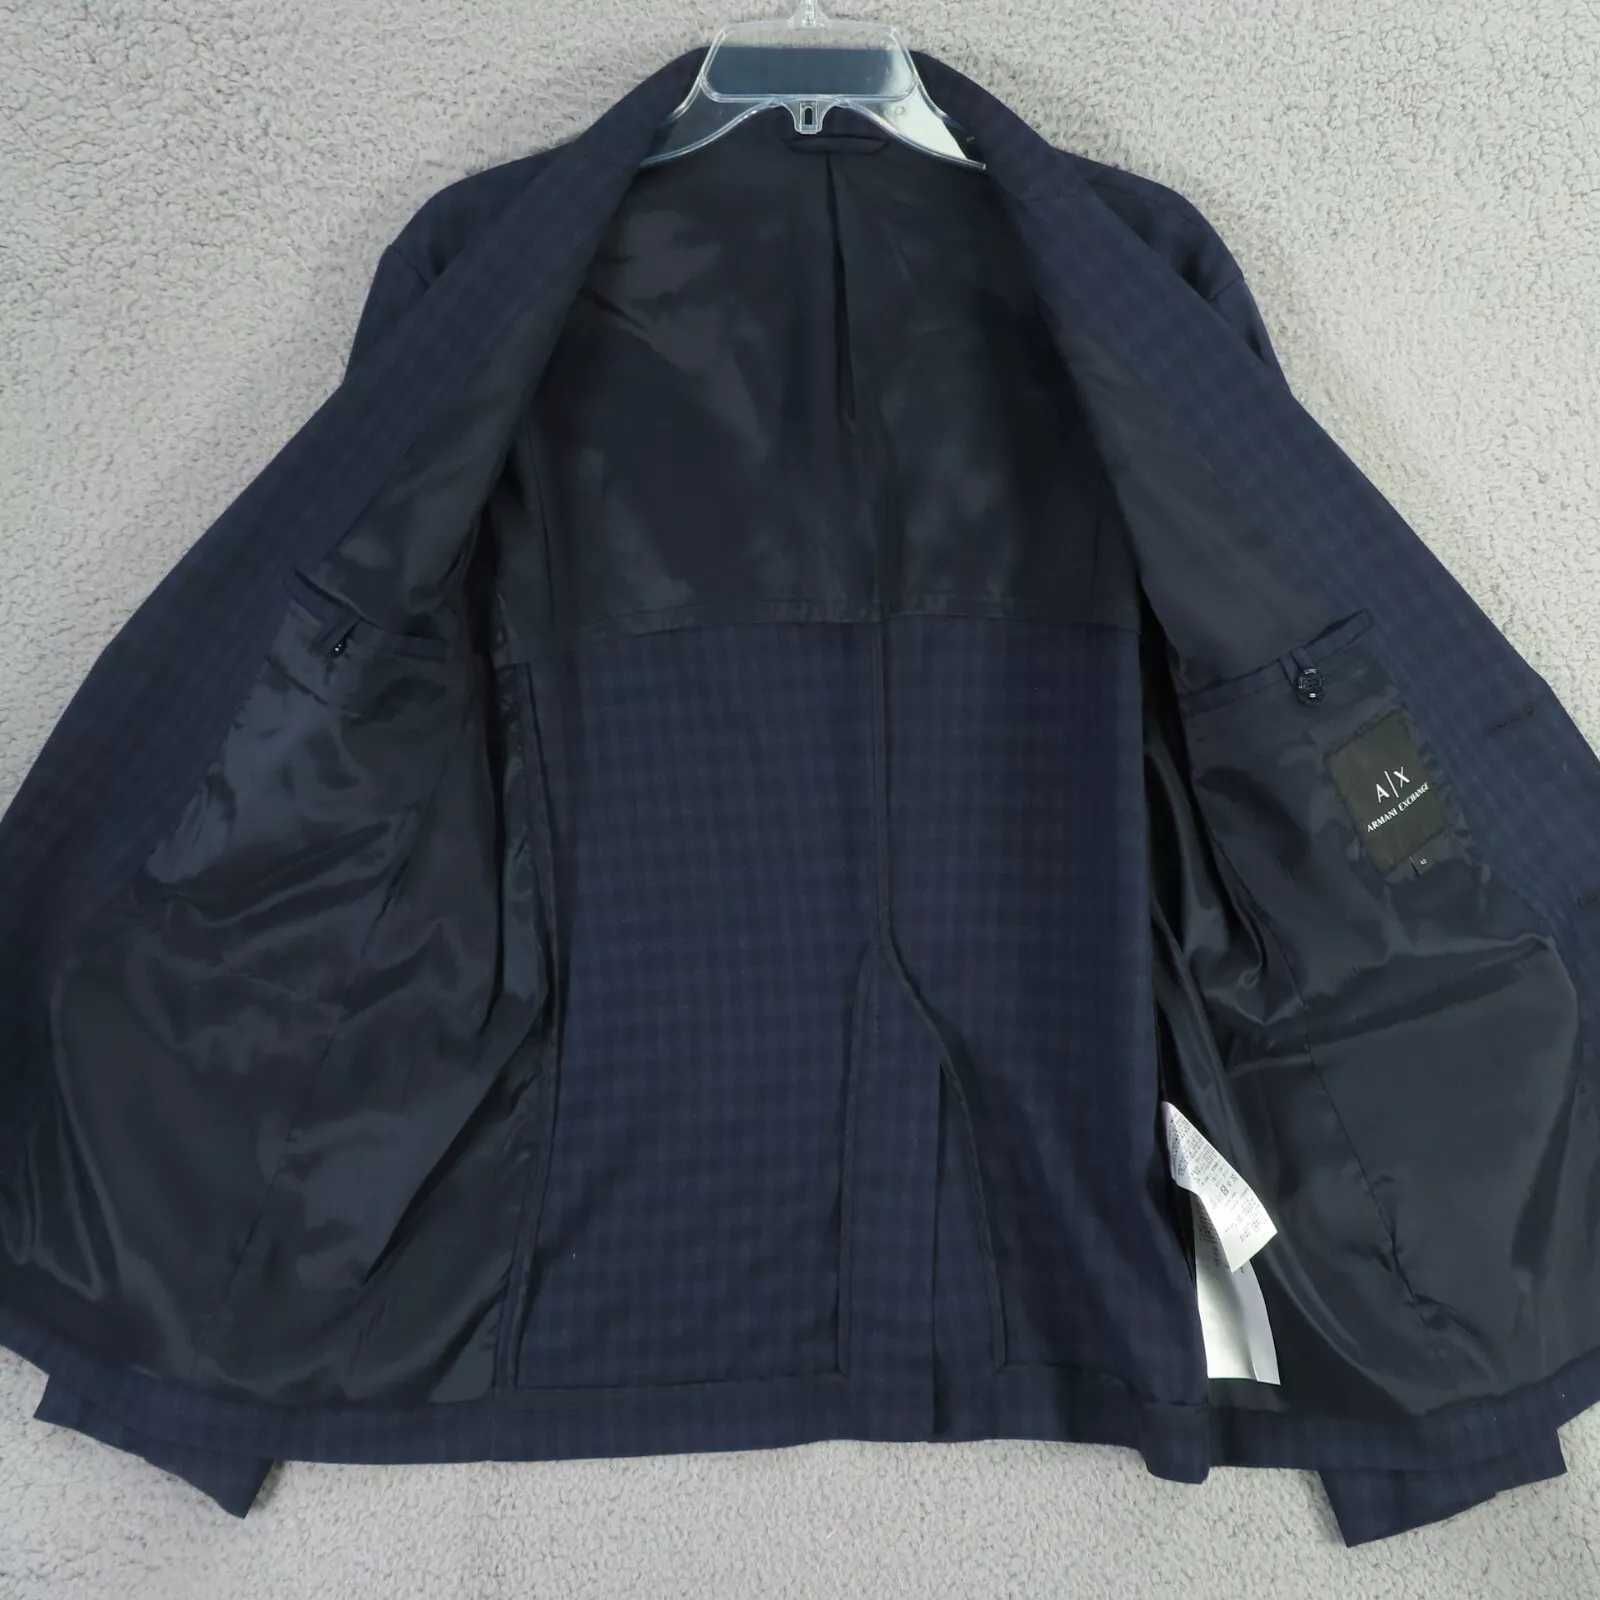 Armani Exchange AX Jacket Sport Coat Mens 42R Blue Check Two Button